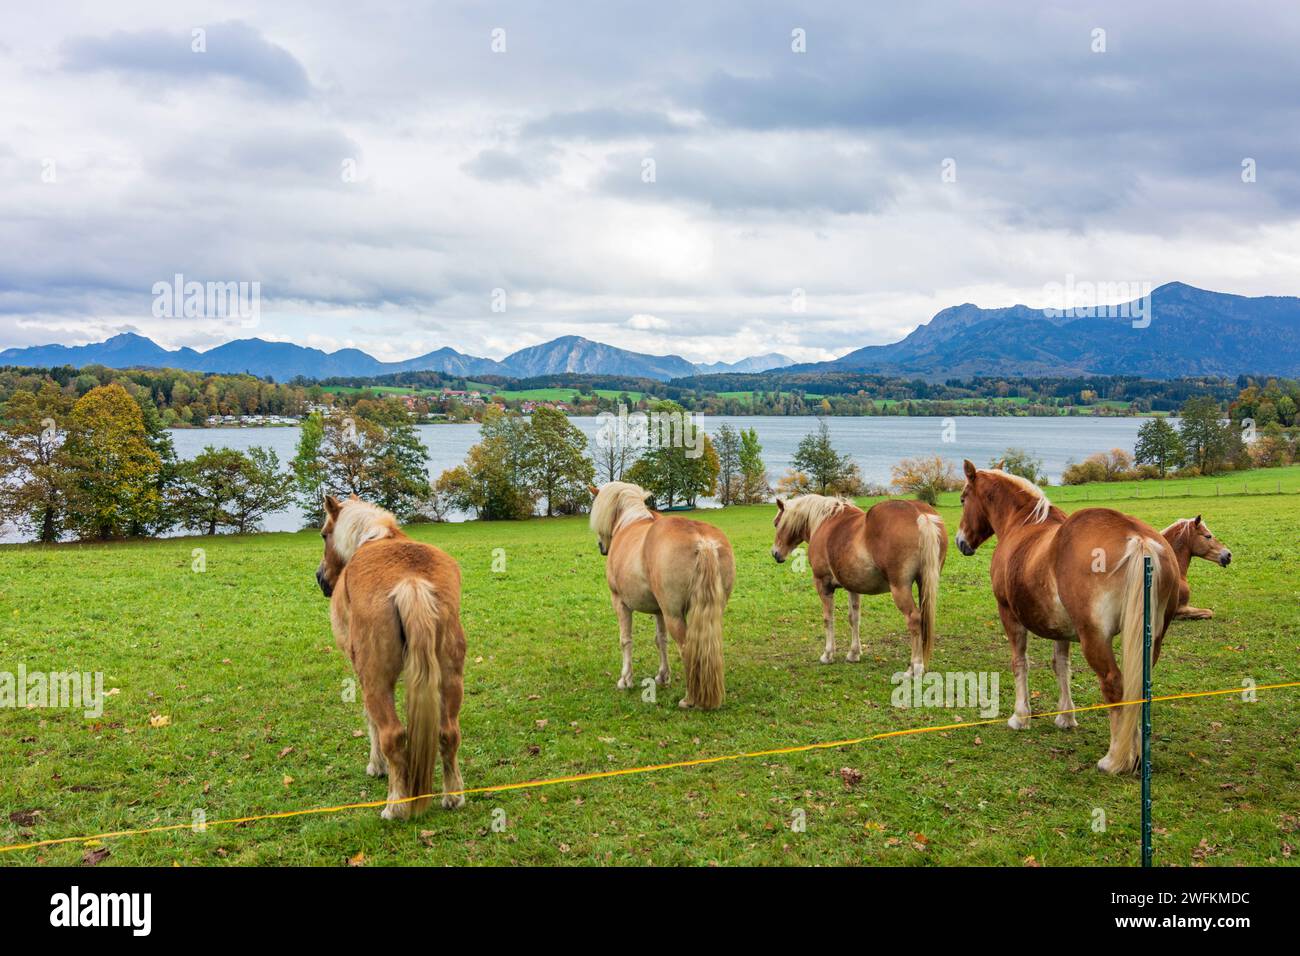 Murnau am Staffelsee: lake Riegsee, Alps, horses in Oberbayern, Pfaffenwinkel, Upper Bavaria, Bayern, Bavaria, Germany Stock Photo